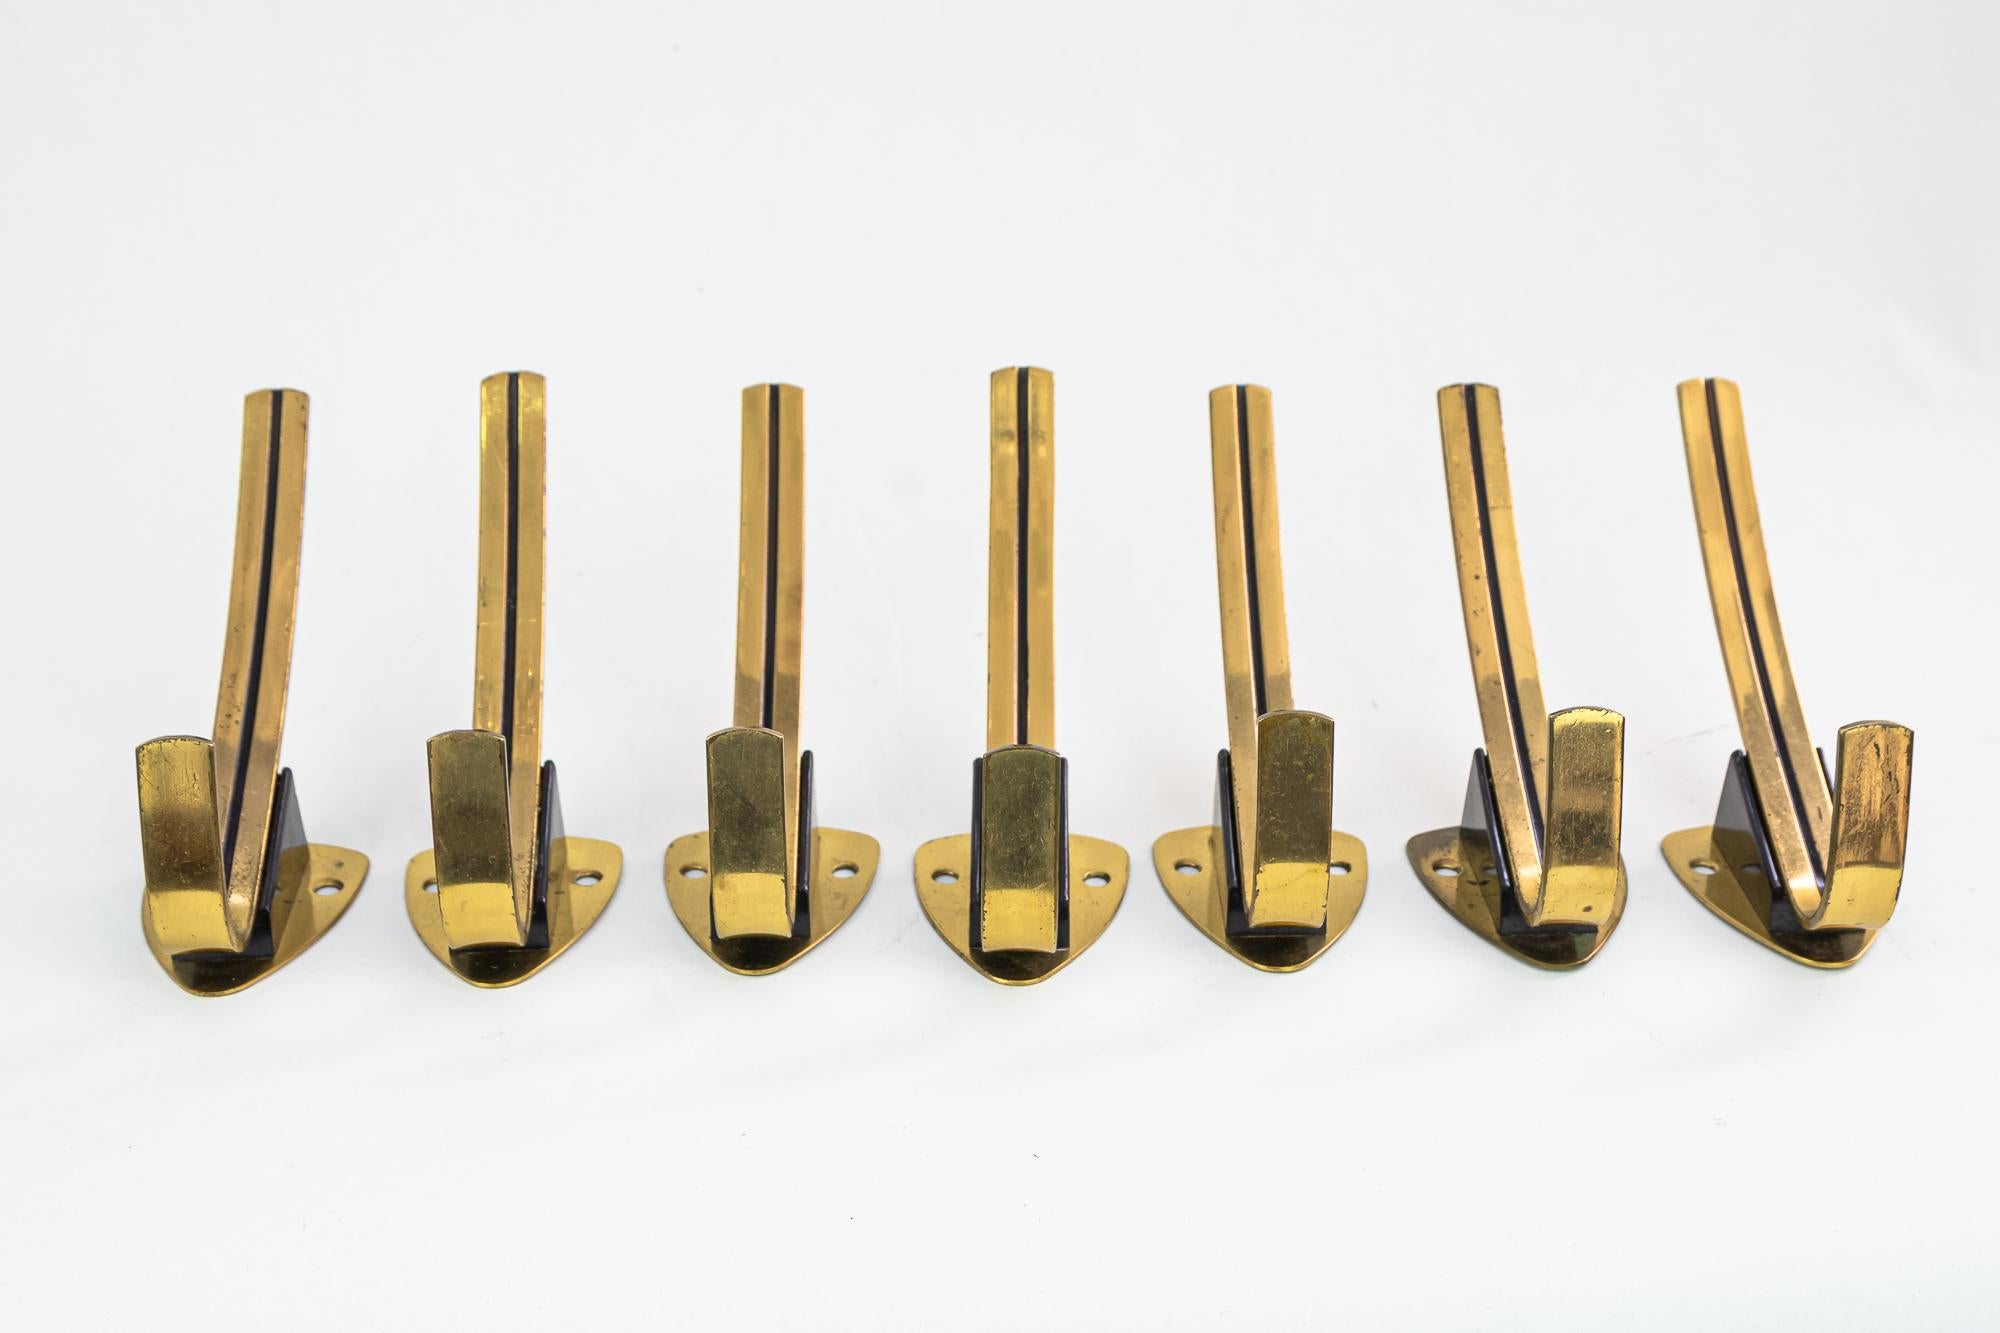 7 rare wall hooks, Vienna, 1960s
Brass and Bakelite
Original condition ( signed ).